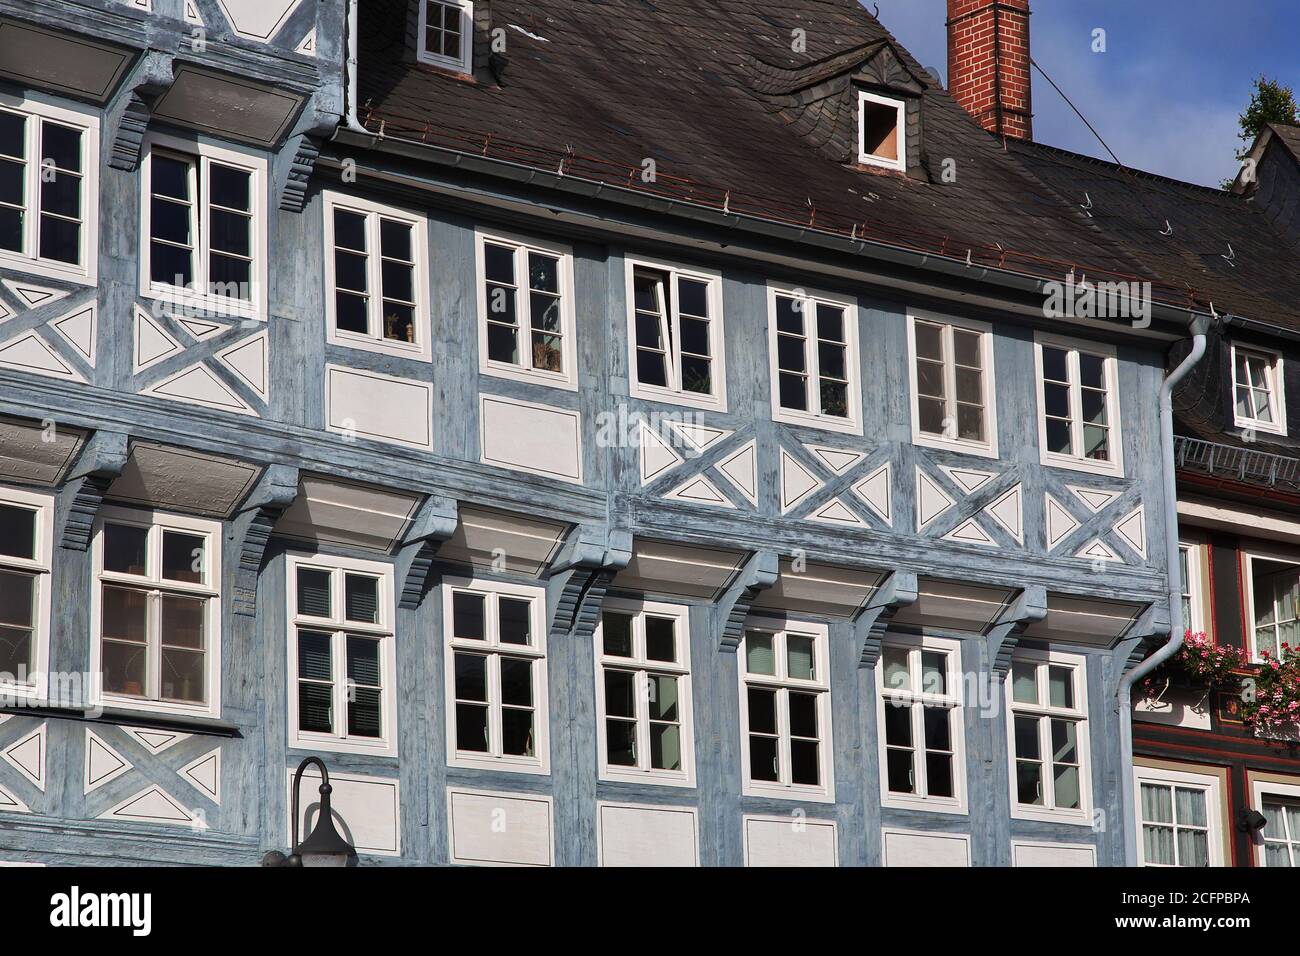 Fachwerk house in Goslar city, Germany Stock Photo